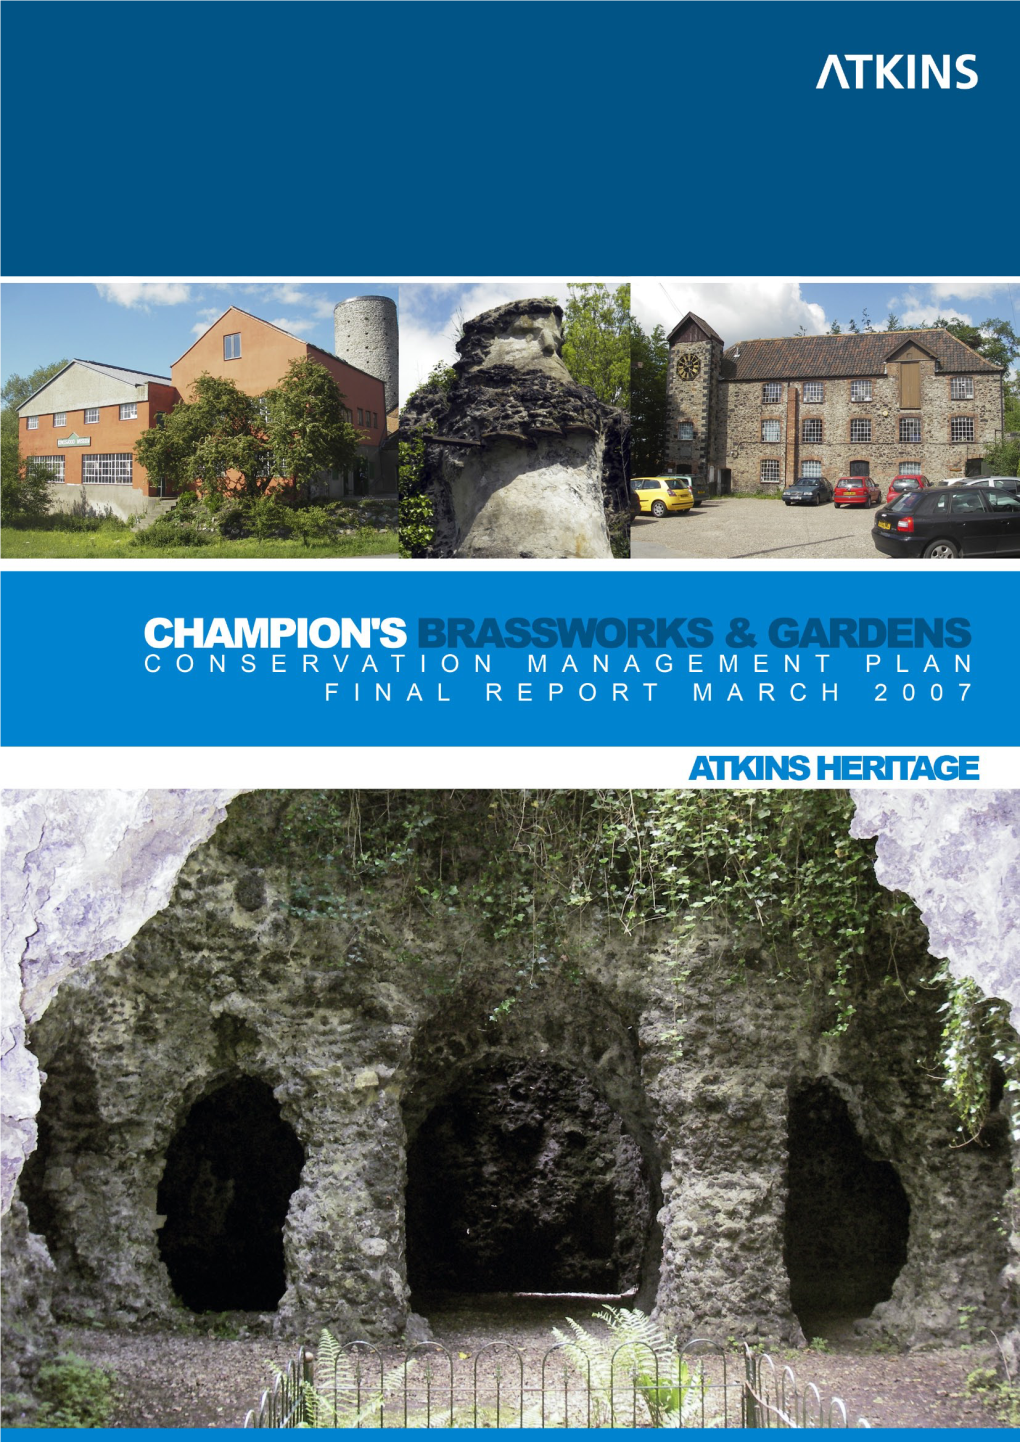 Champion's Brassworks & Gardens Warmley, South Gloucestershire Conservation Management Plan